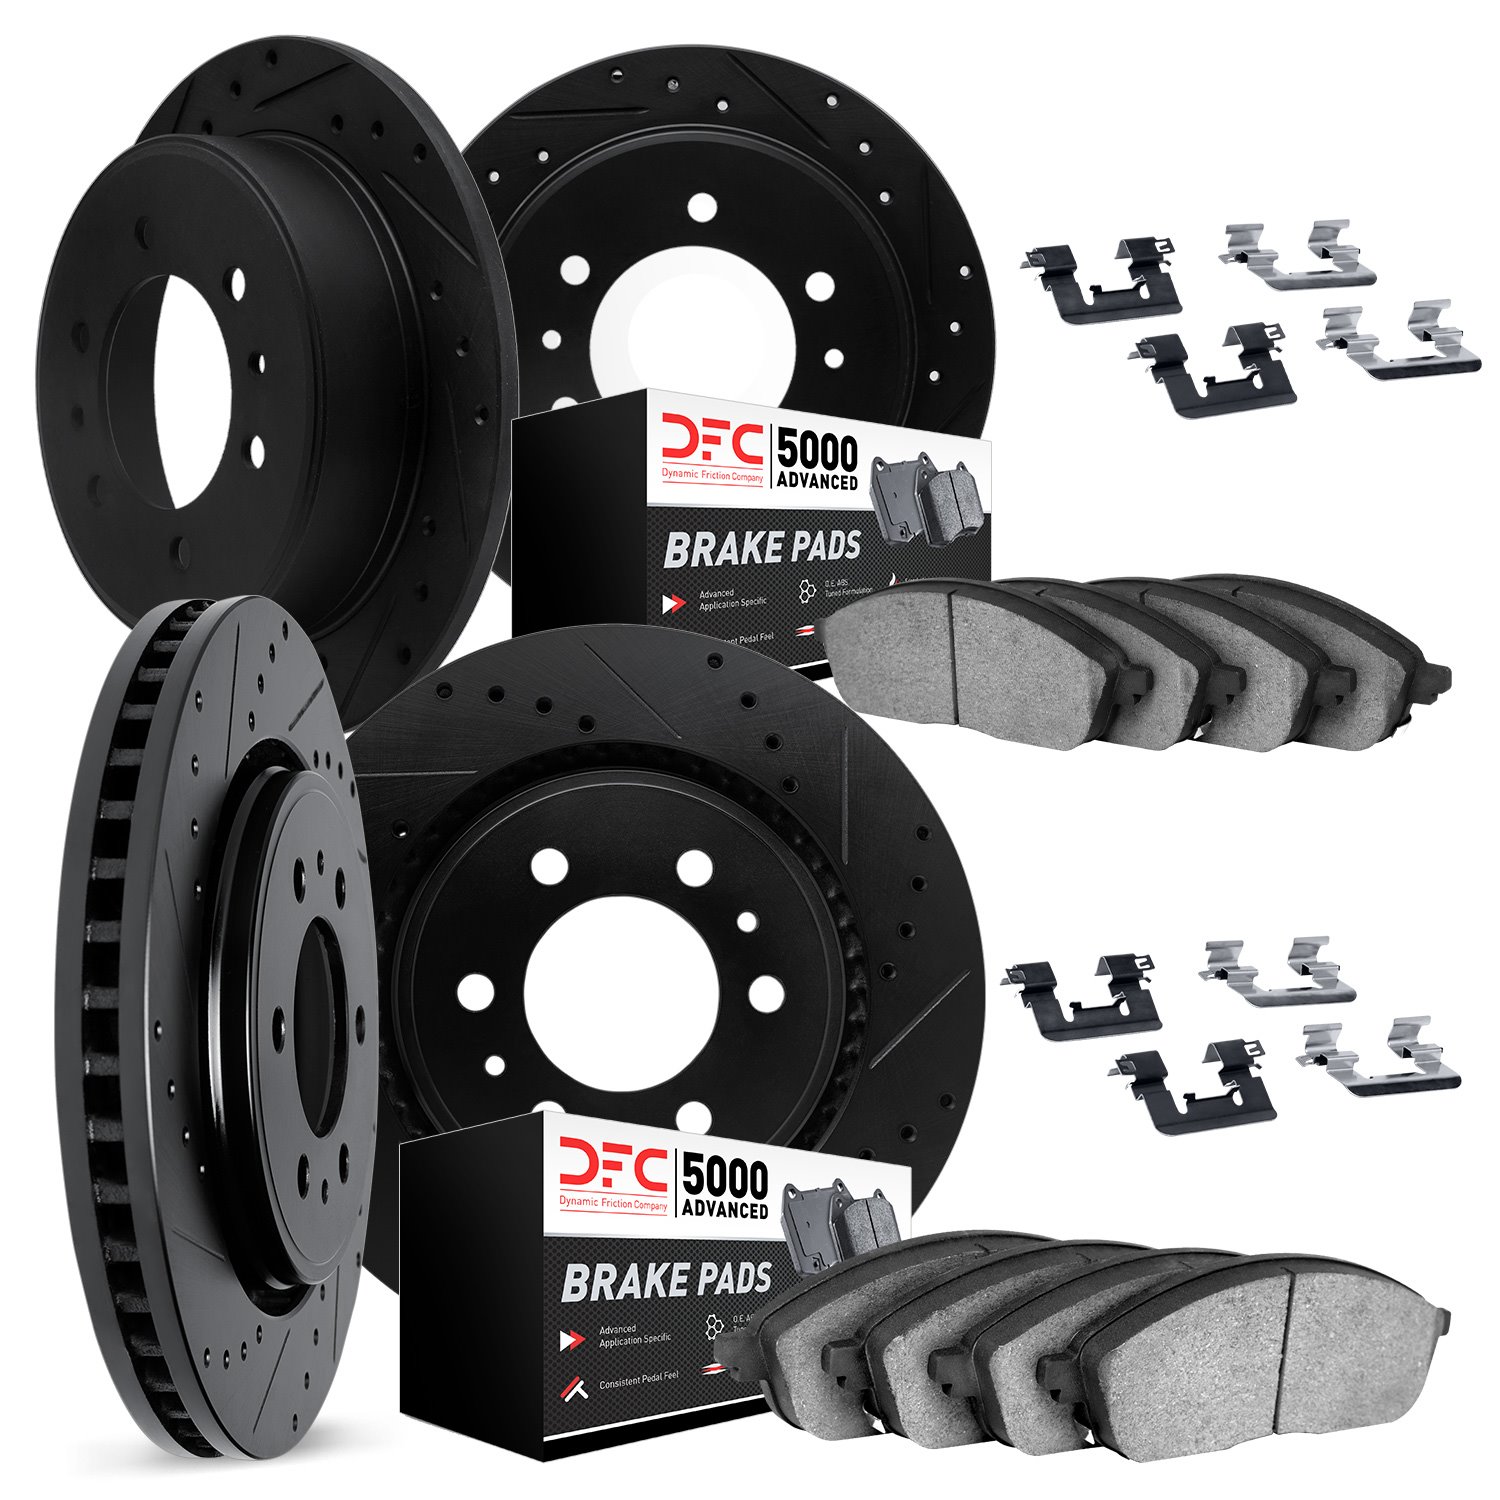 8514-67069 Drilled/Slotted Brake Rotors w/5000 Advanced Brake Pads Kit & Hardware [Black], 2007-2015 Infiniti/Nissan, Position: